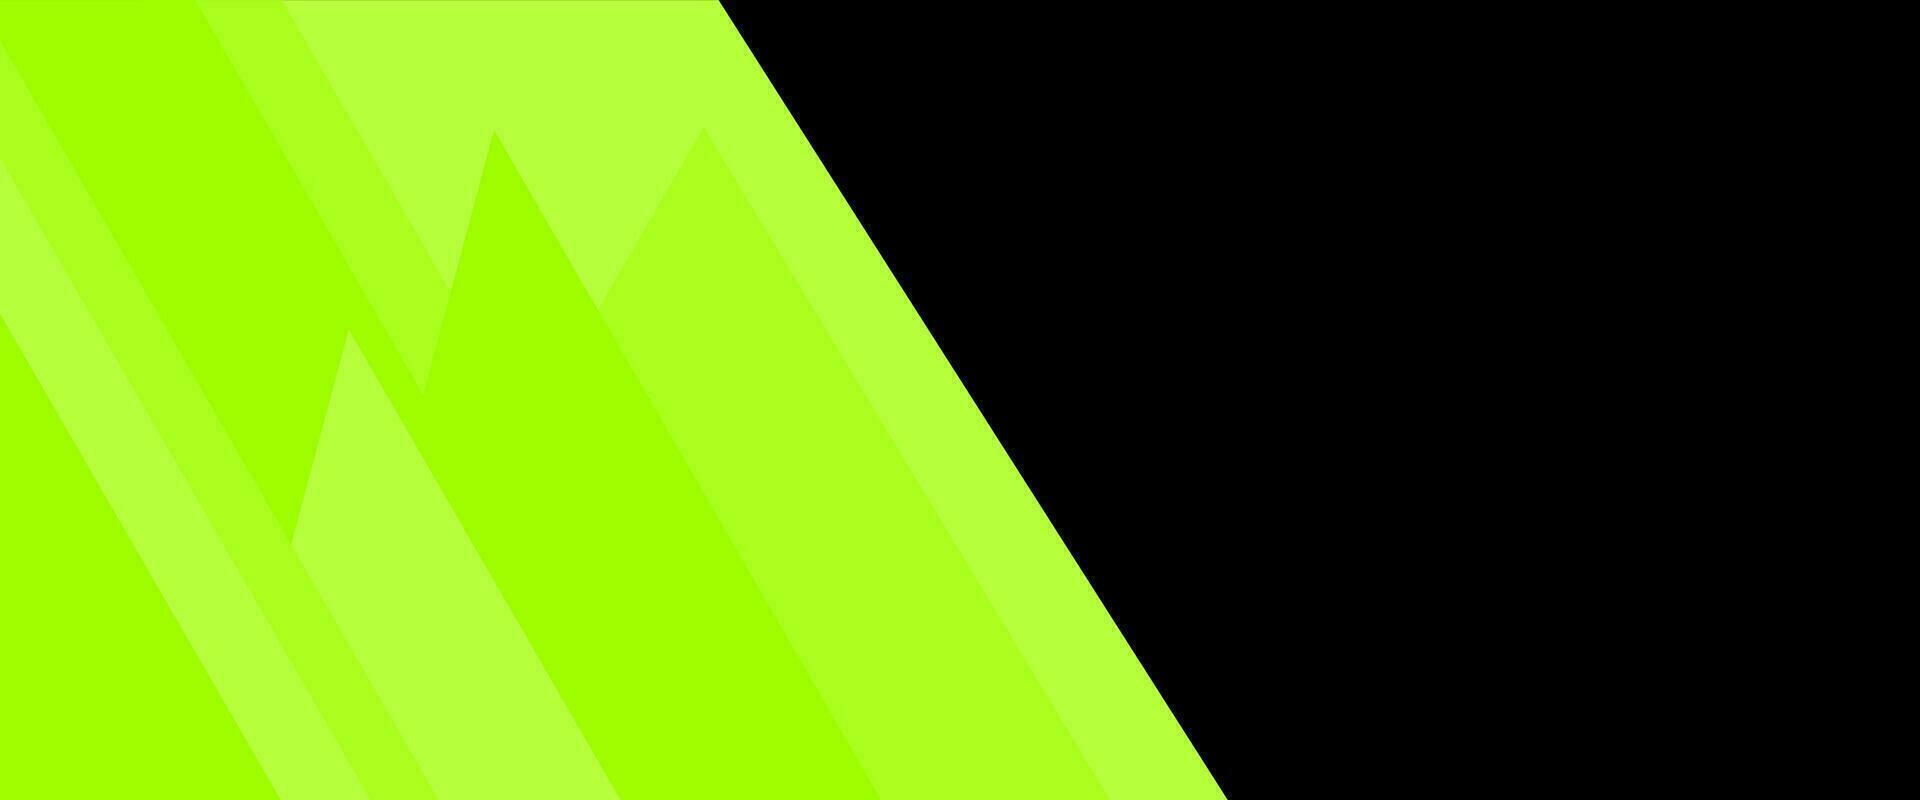 modern grön bakgrund baner design, spel, sporter, cyber tema vektor